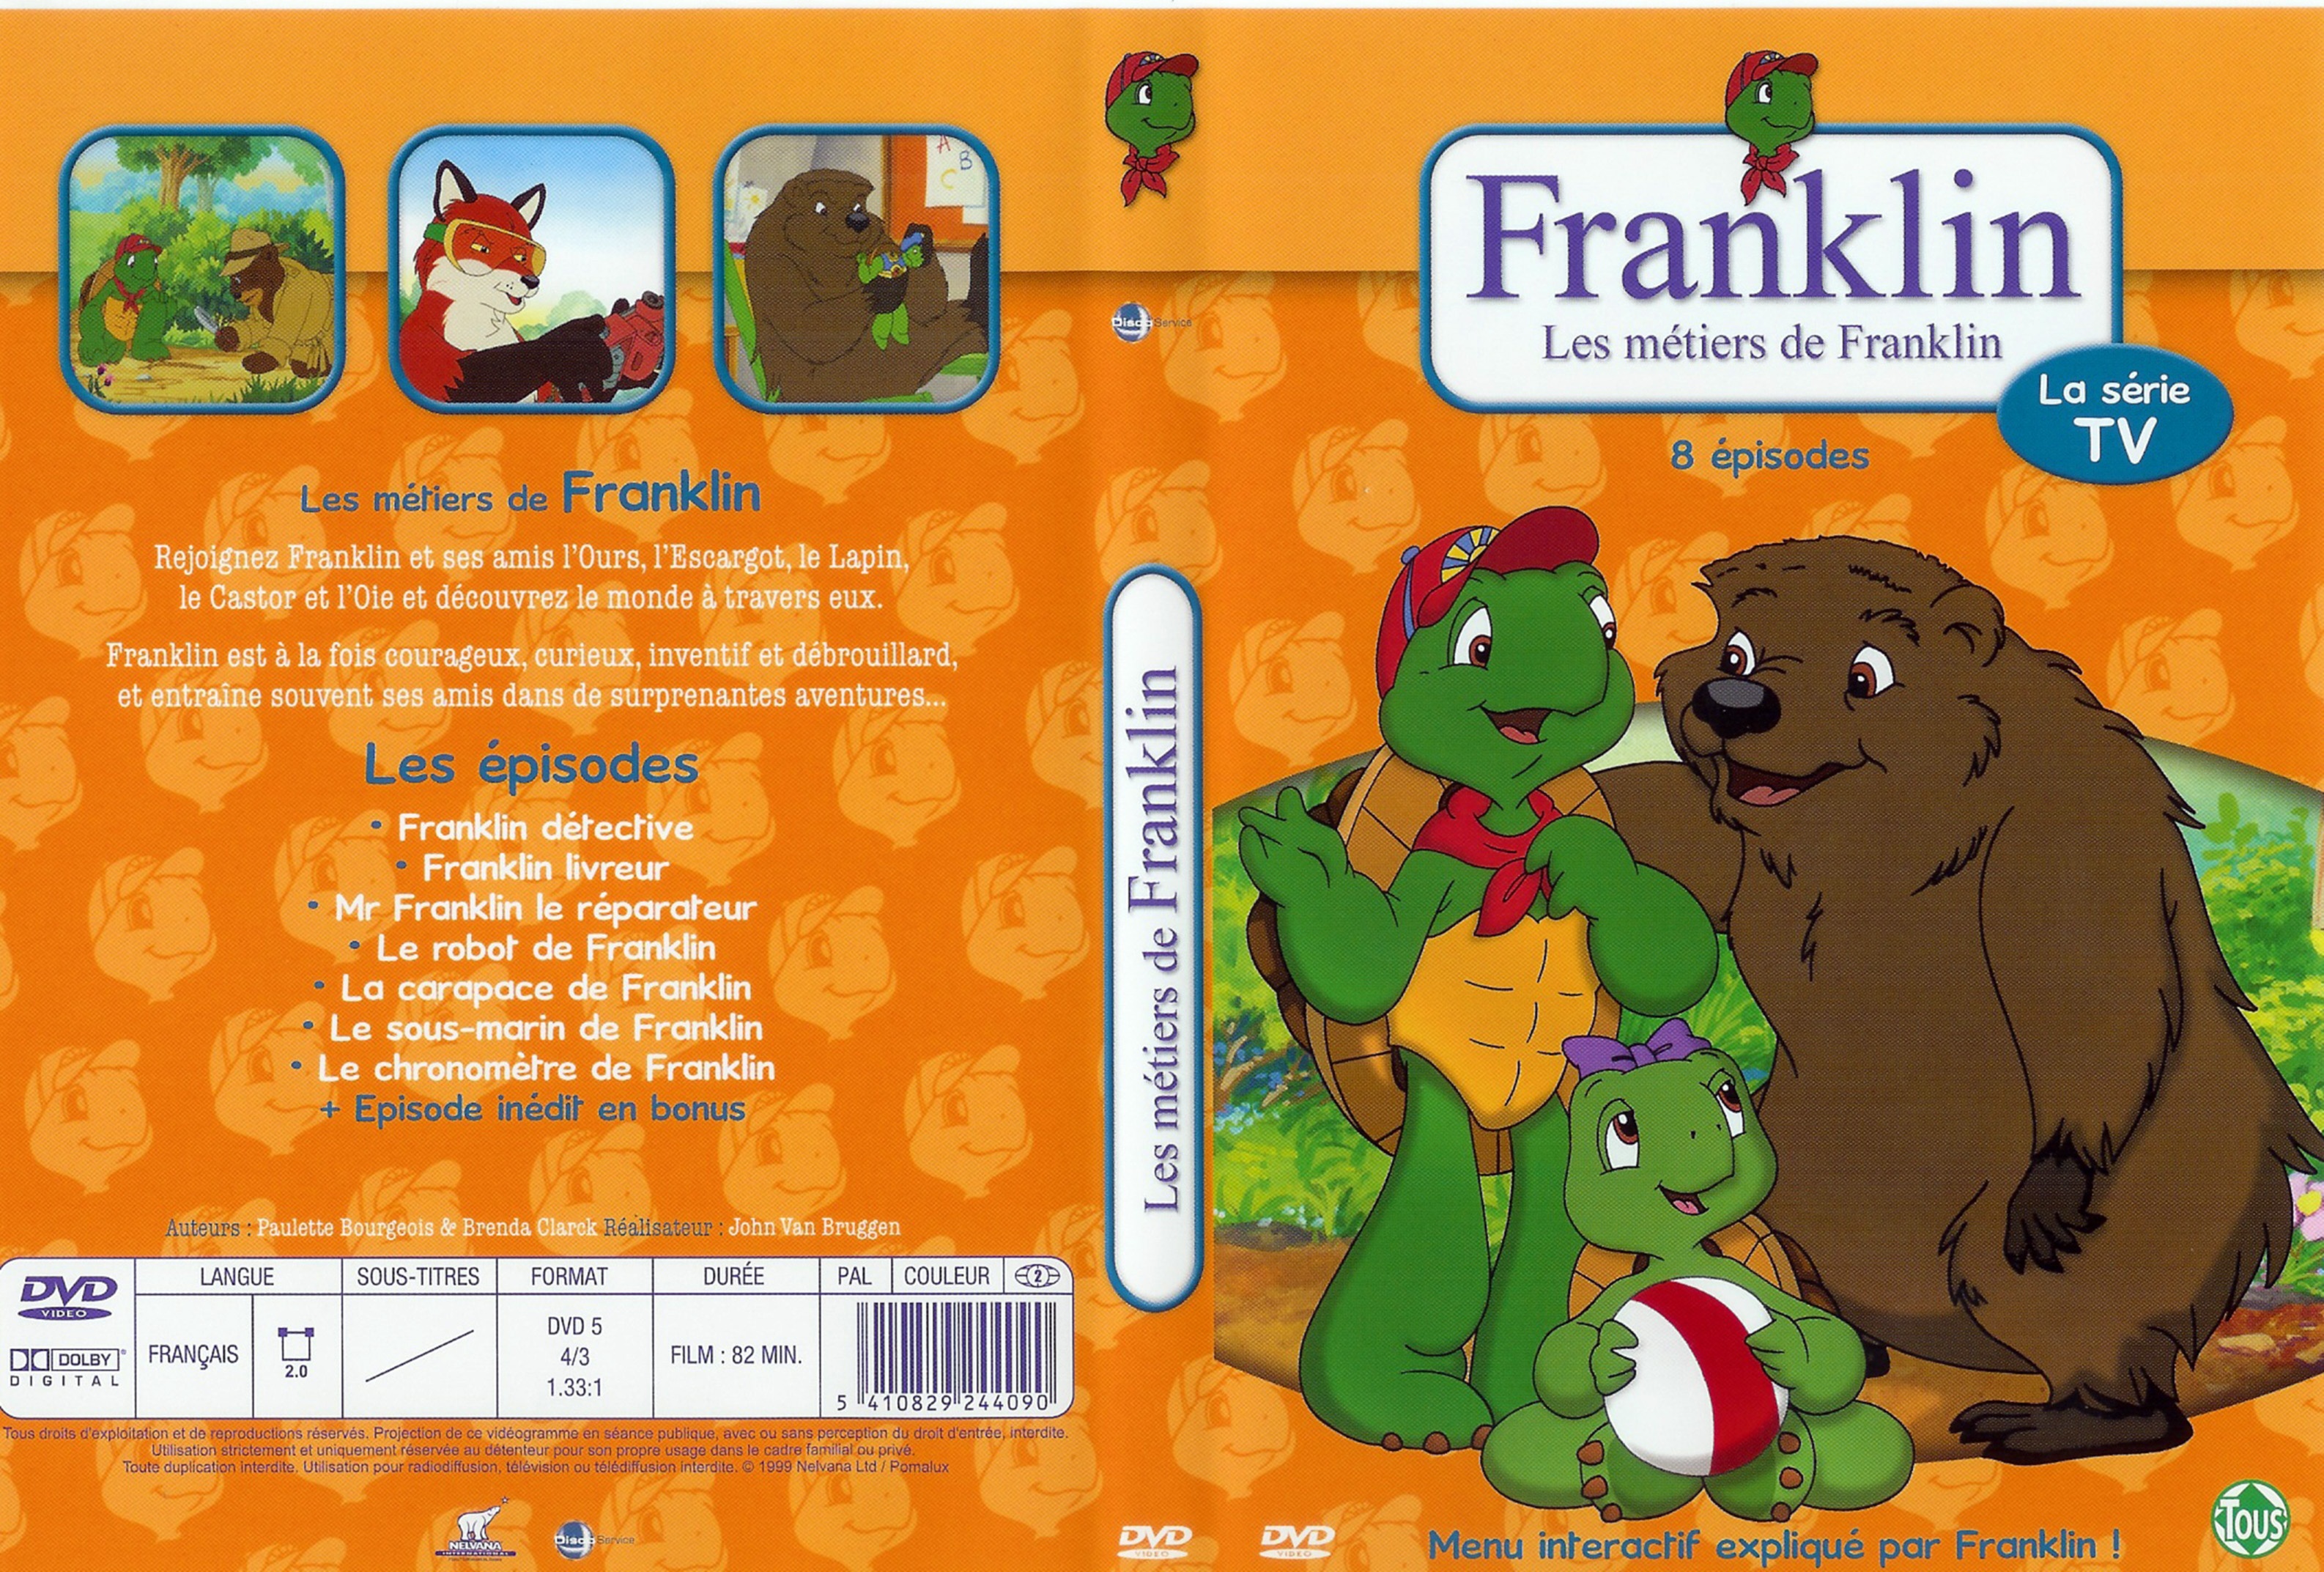 Jaquette DVD Franklin les metiers de franklin v2